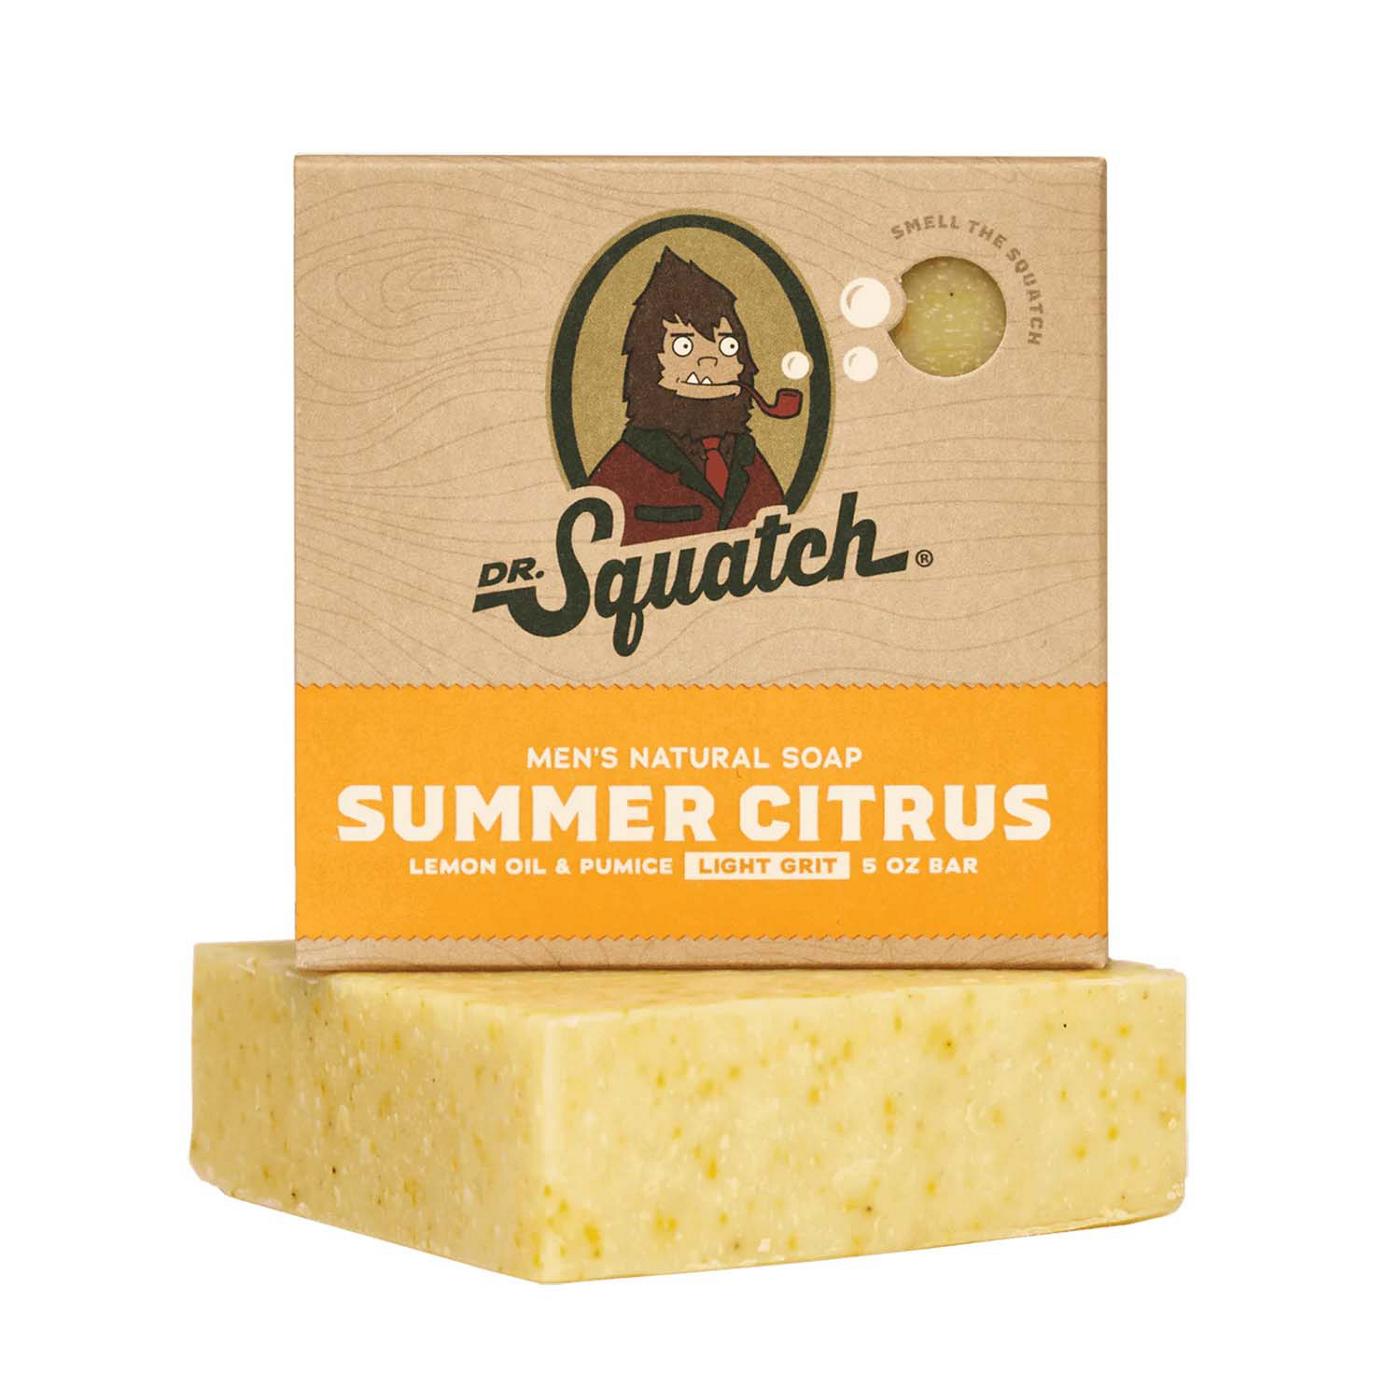 Dr. Squatch Men's Natural Soap - Summer Citrus; image 3 of 5